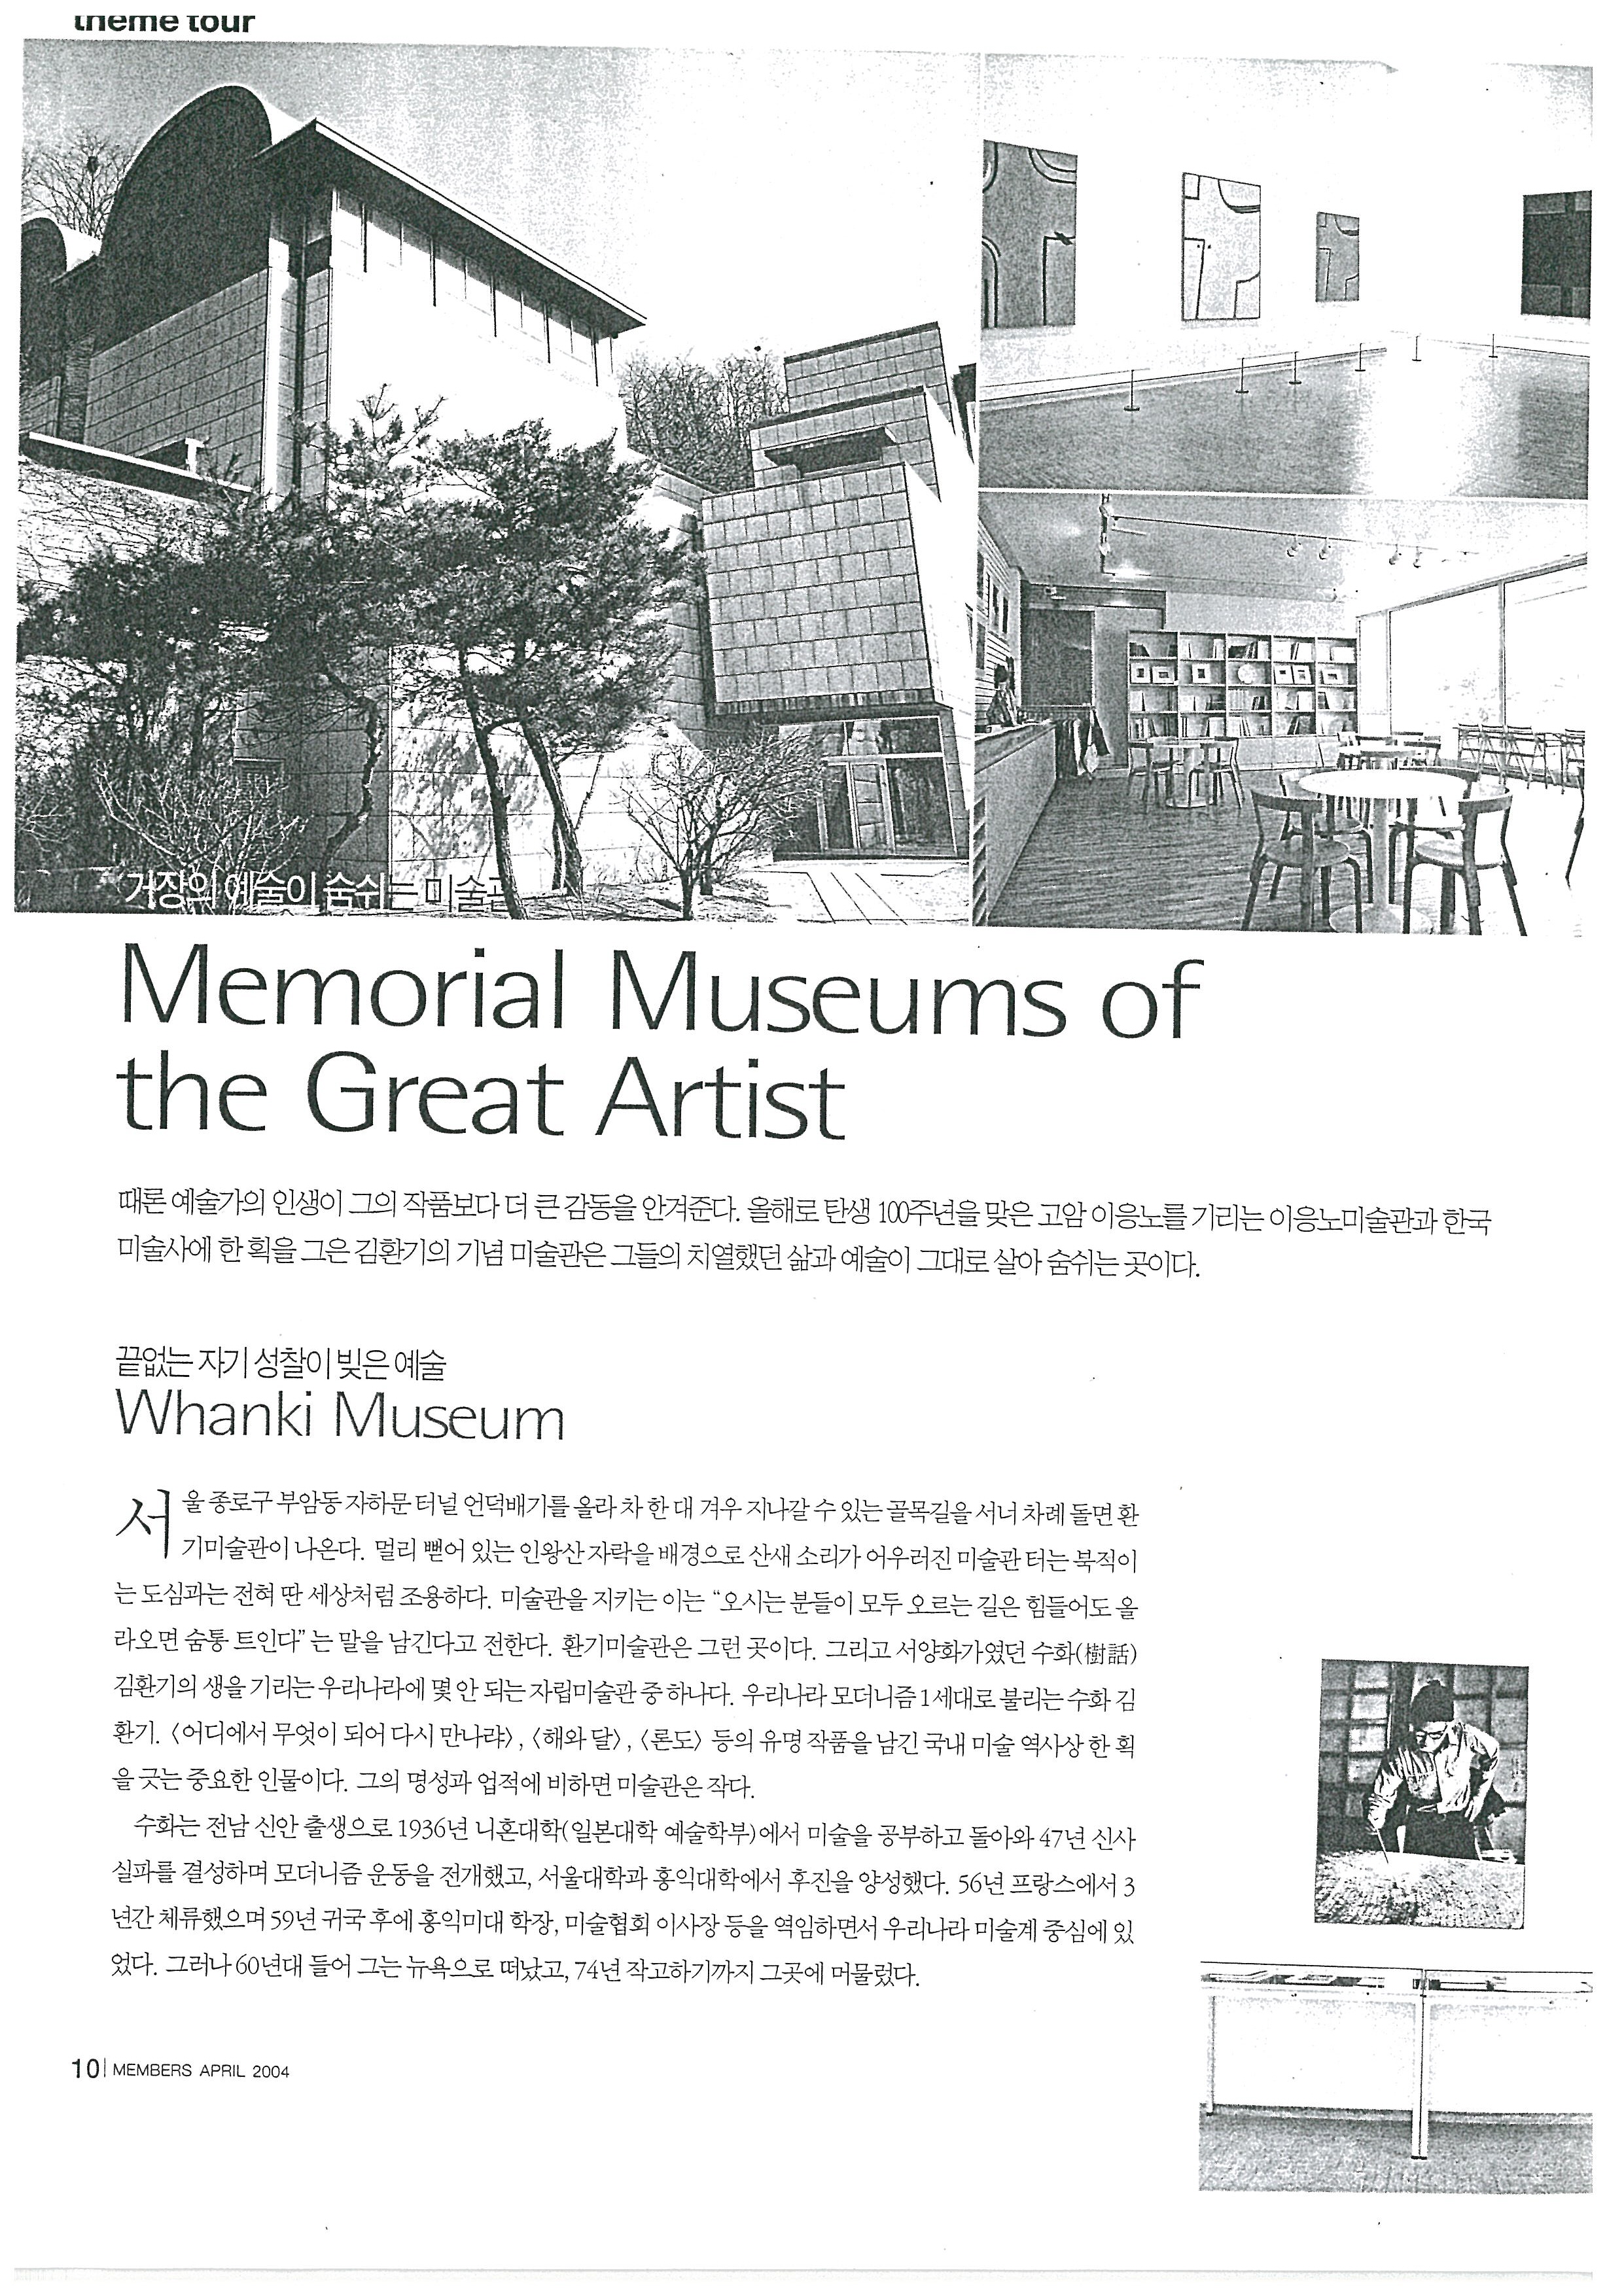 「Memorial Museums of the Great Artist」, 『SHINHAN Members』